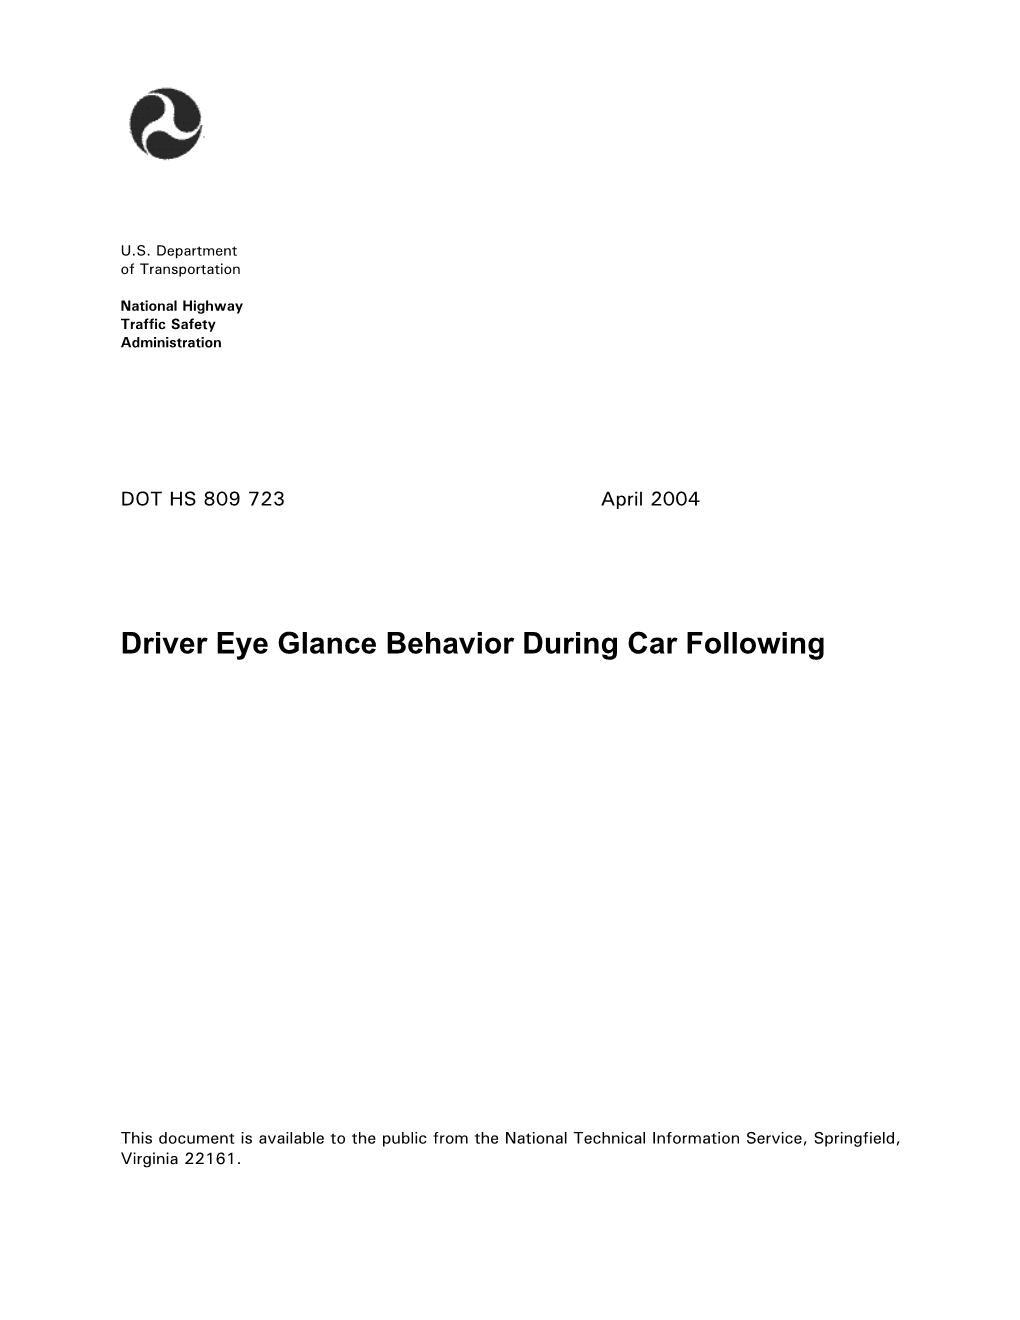 Driver Eye Glance Behavior During Car Following